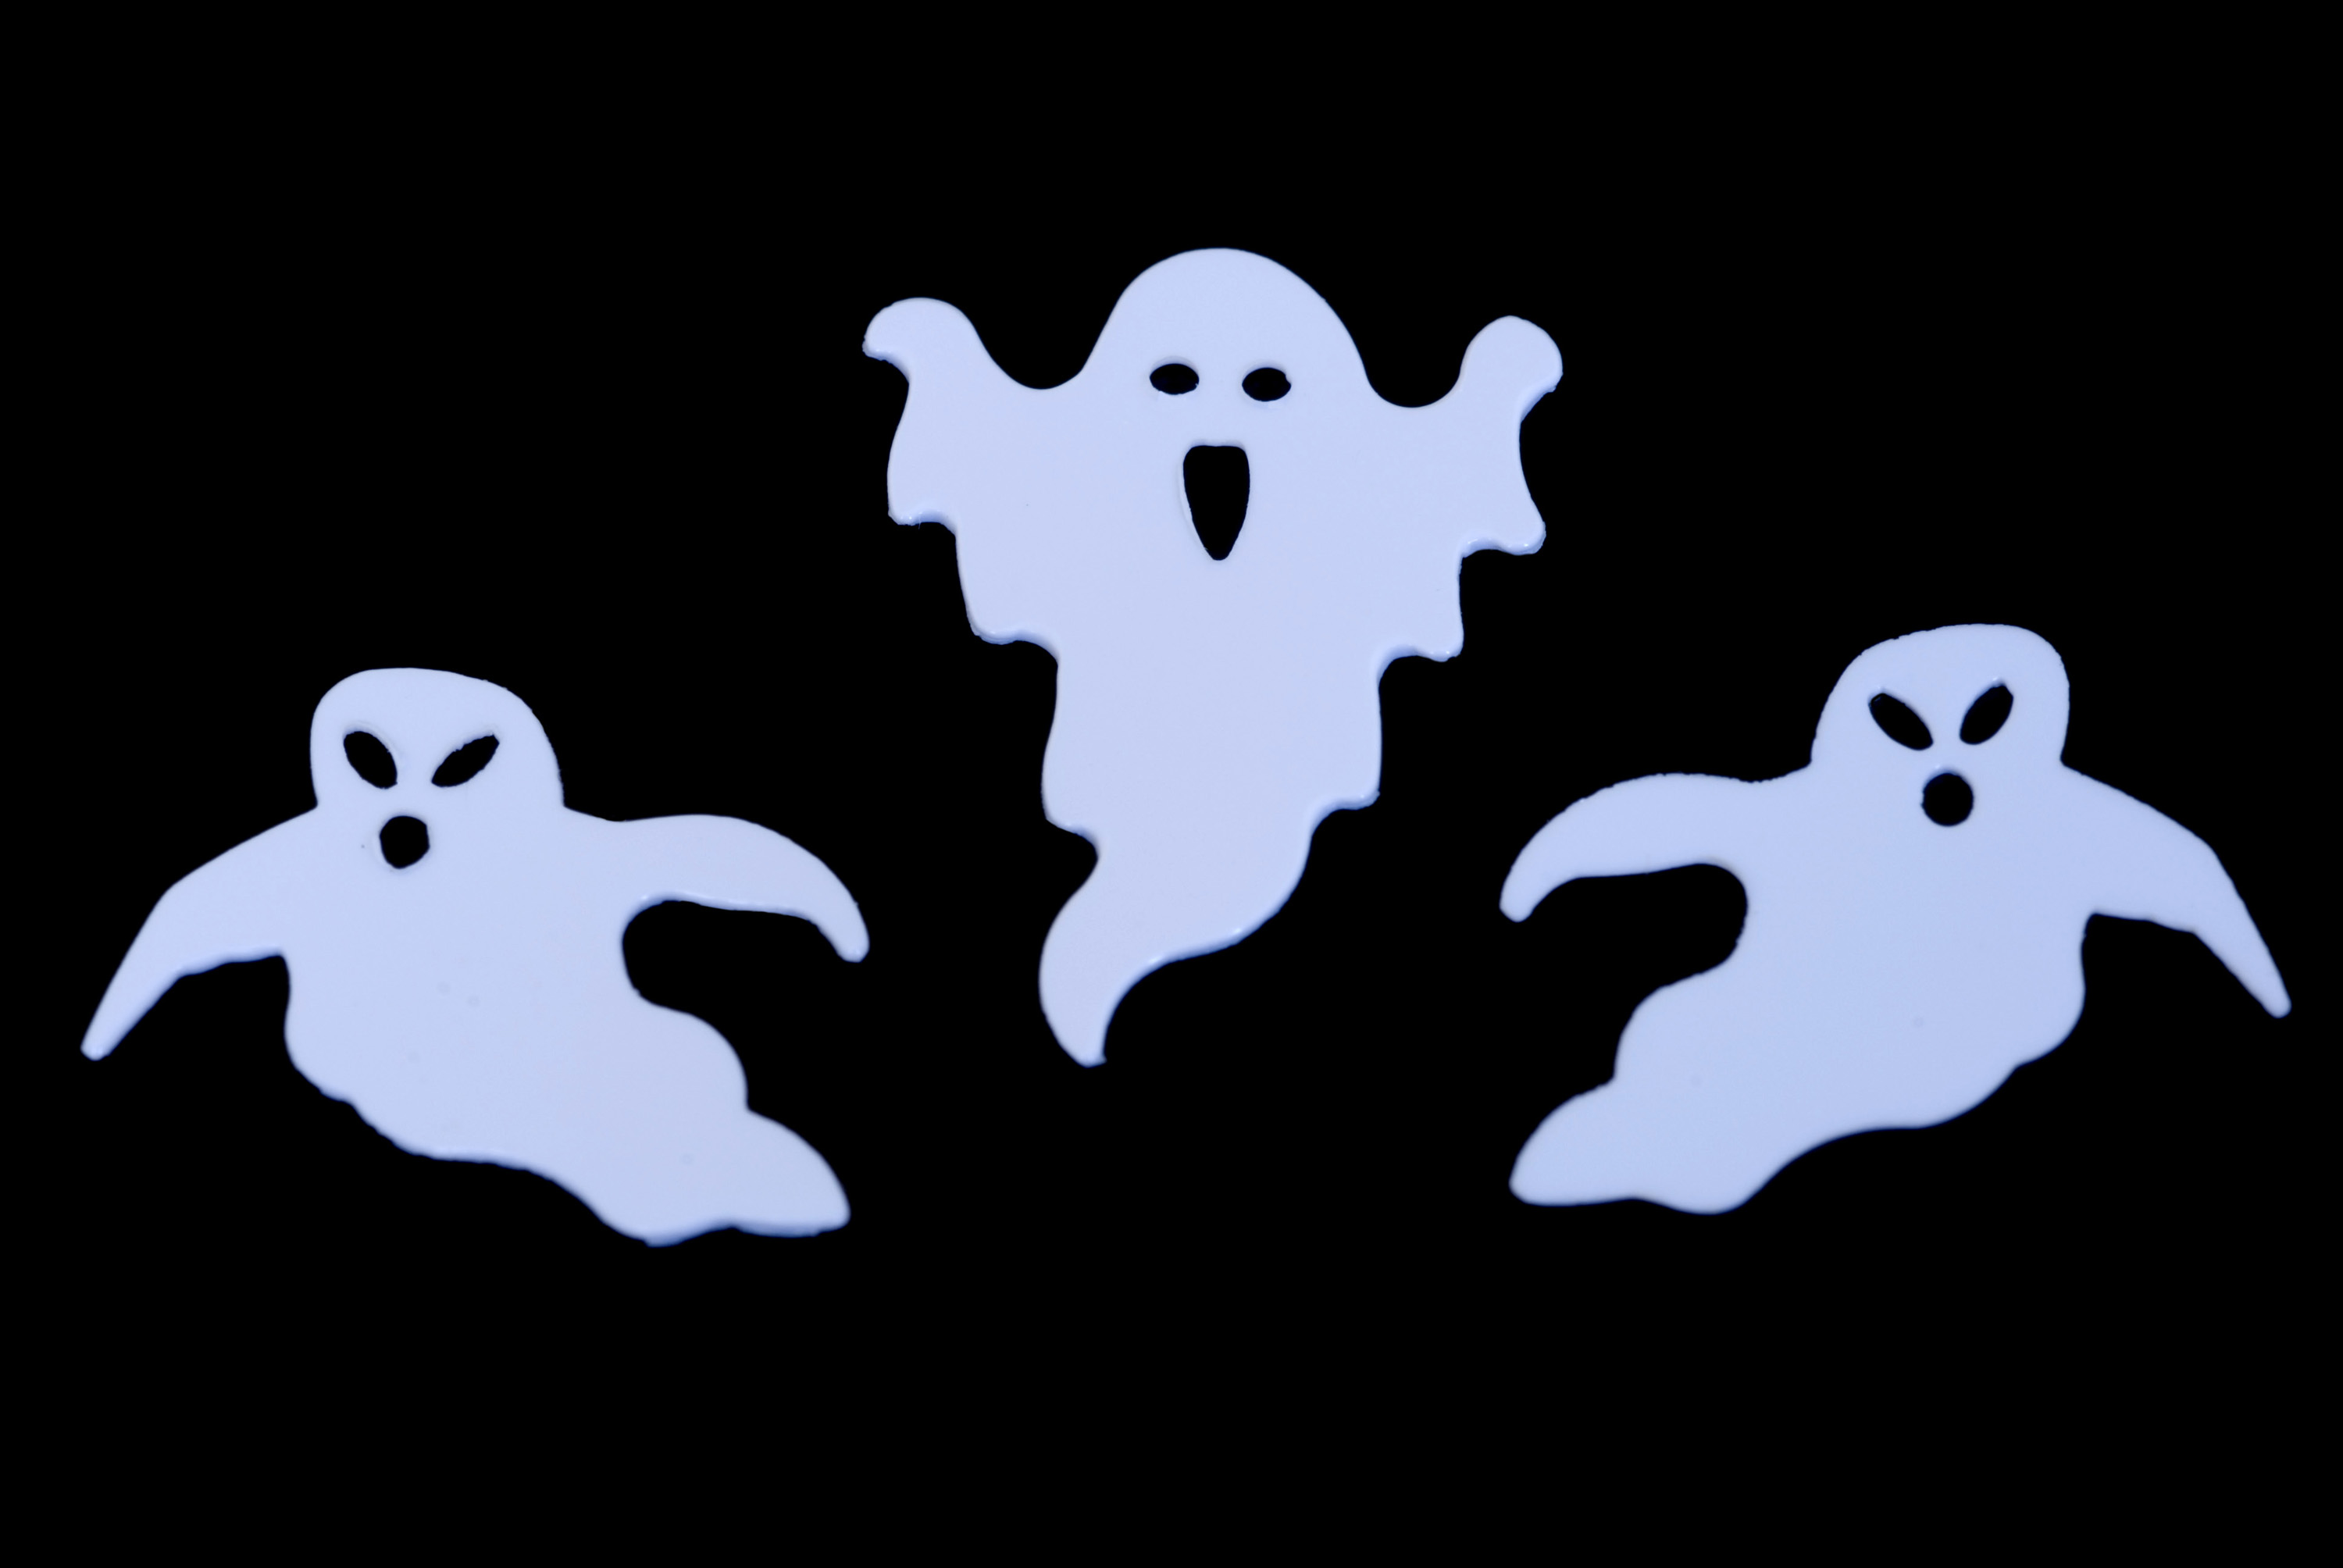 image-of-three-different-ghosts-creepyhalloweenimages